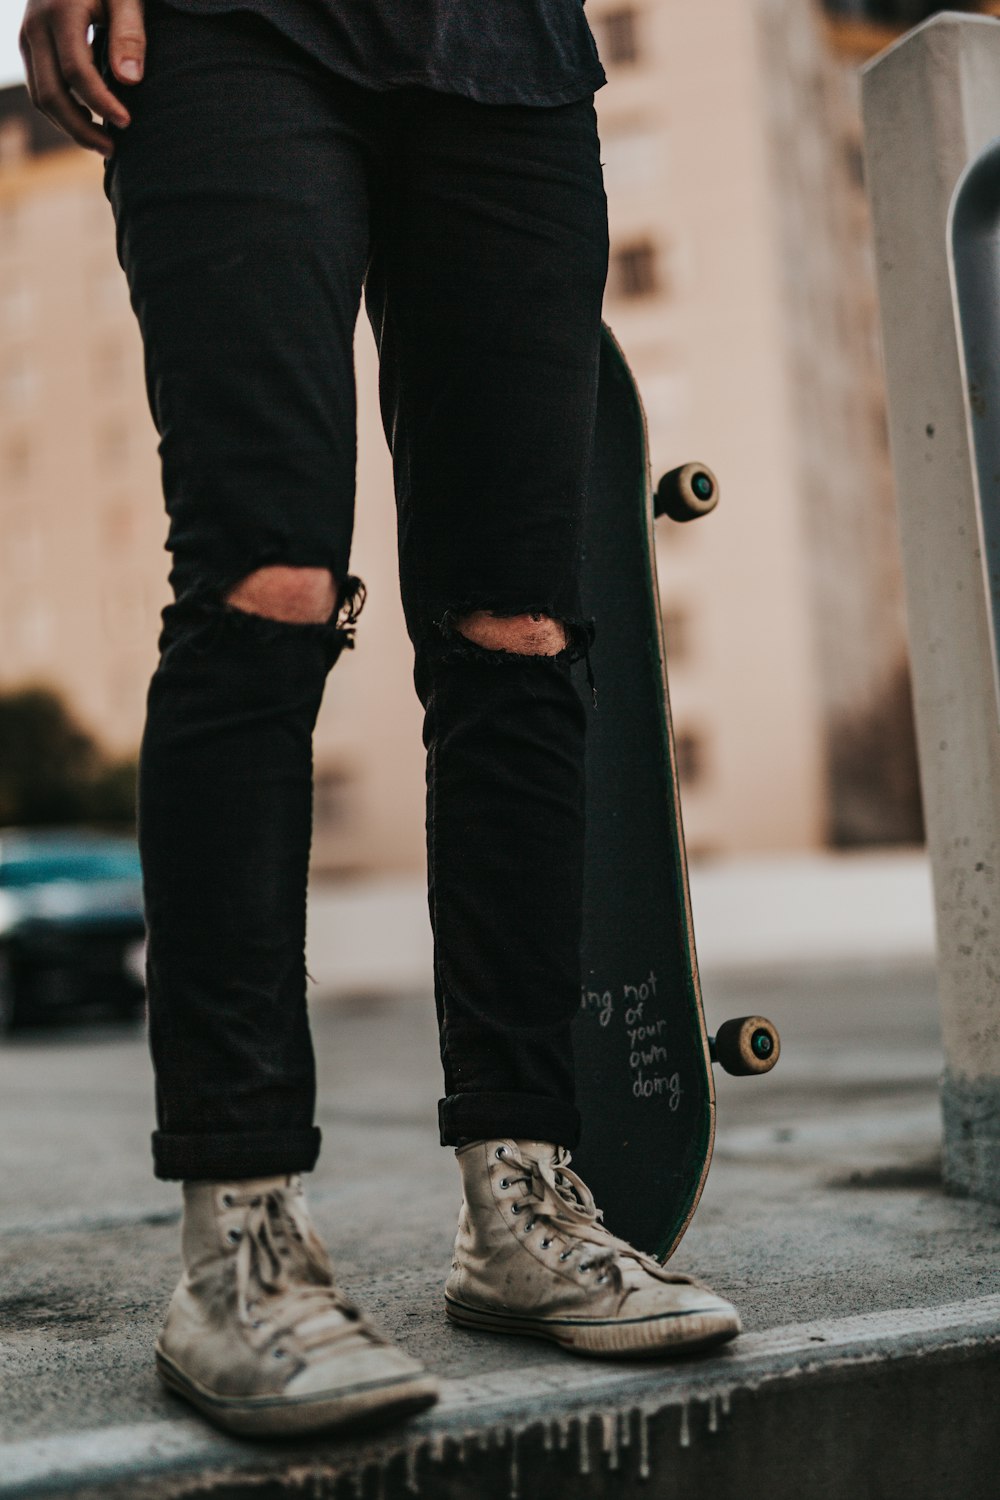 person wearing black denim pants while holding skateboard